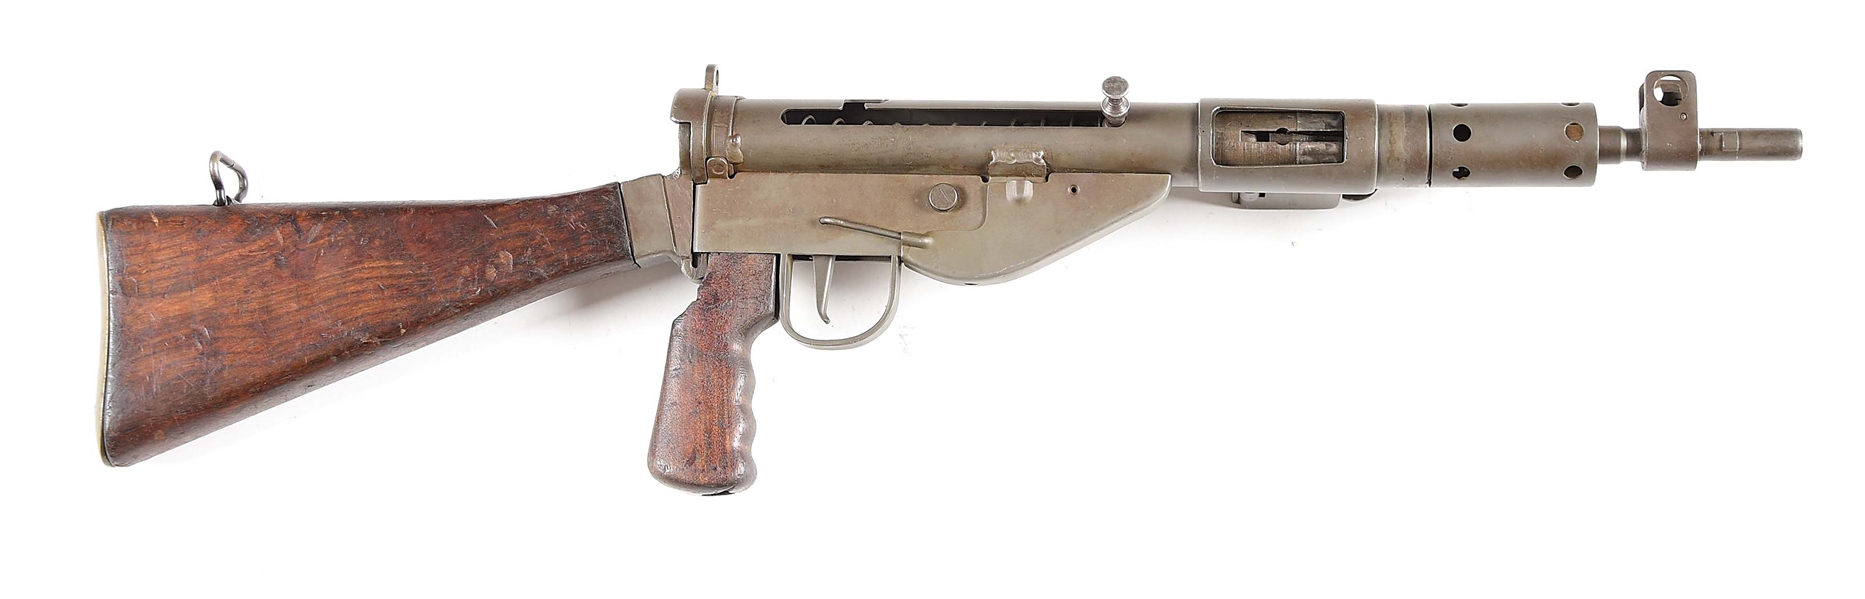 (N) VERY CLEAN AND ATTRACTIVE ERB REGISTERED RECEIVER BRITISH STEN MK V MACHINE GUN (FULLY TRANSFERABLE).